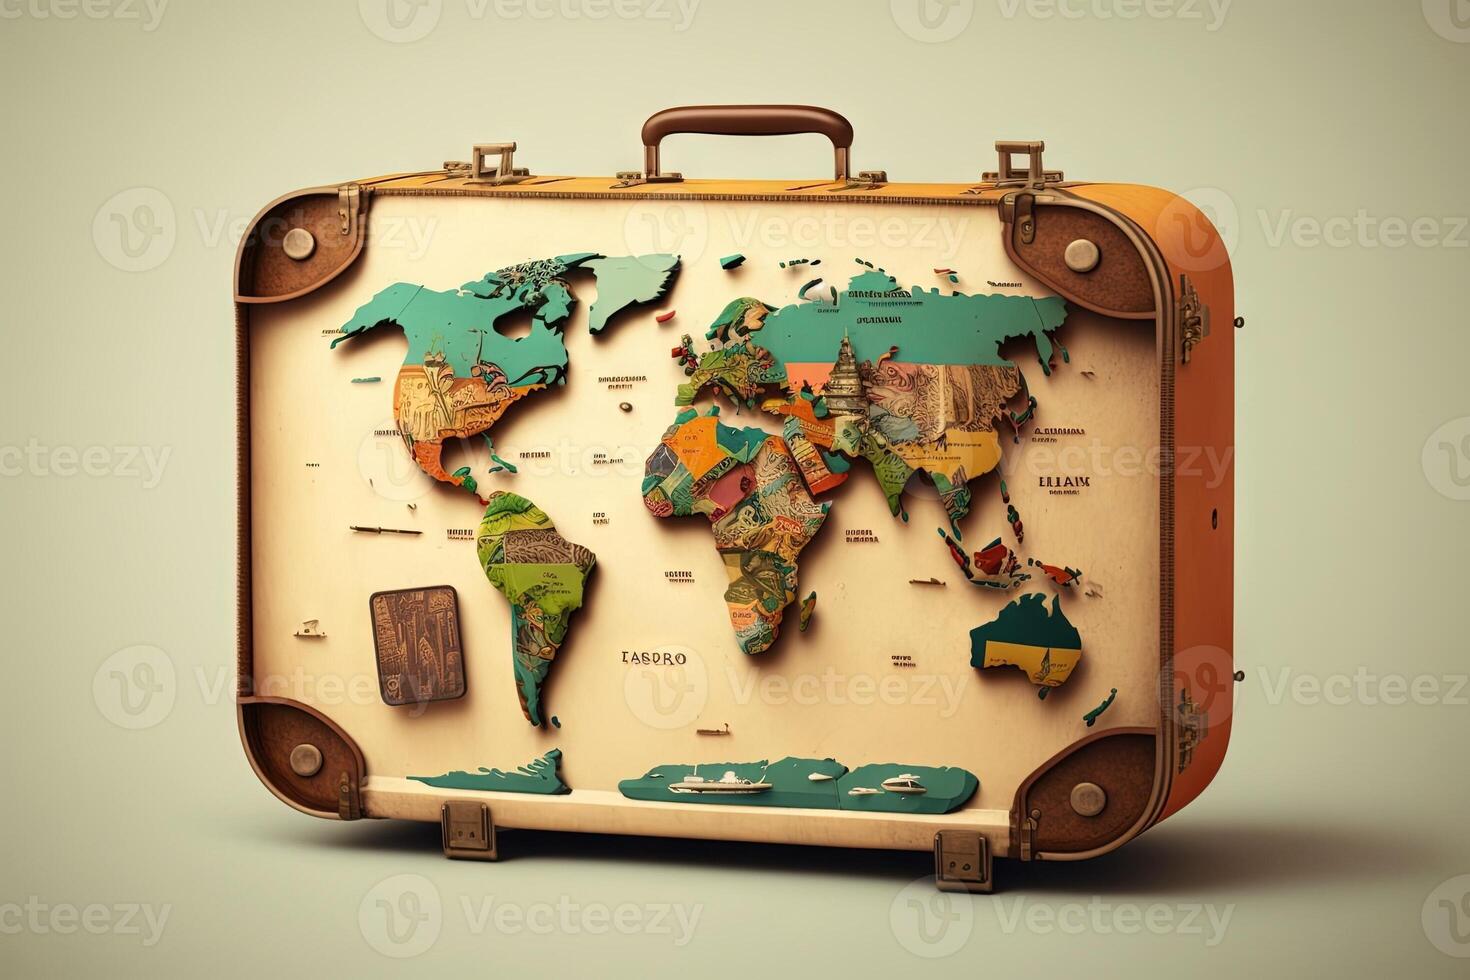 Travel suitcase with world map illustration photo